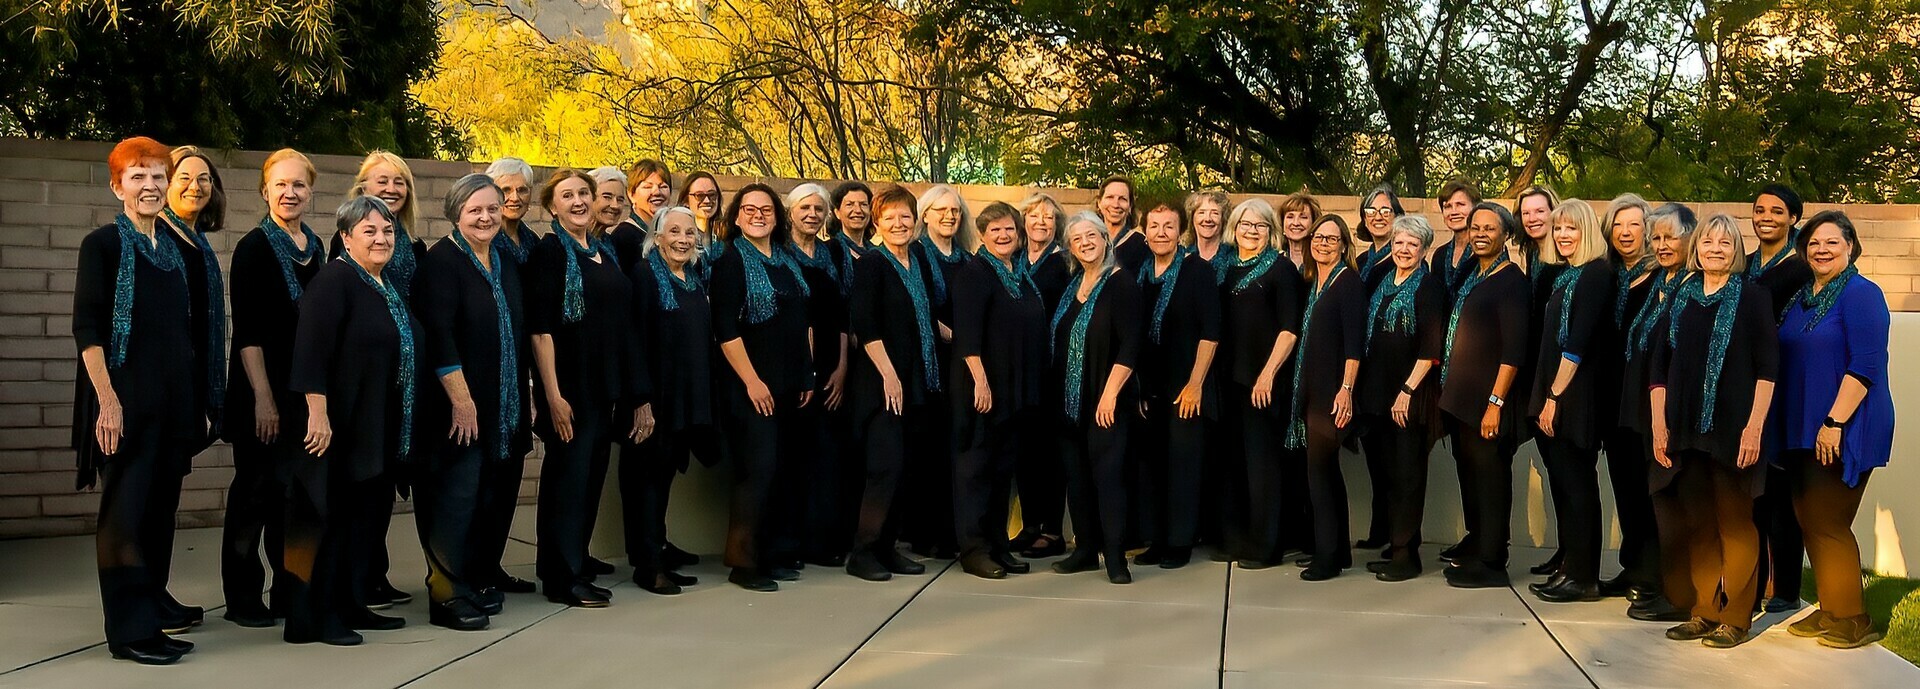 Arizona Women's Chorus Spring Concert - "Feel The Spirit", Tucson, Arizona, United States